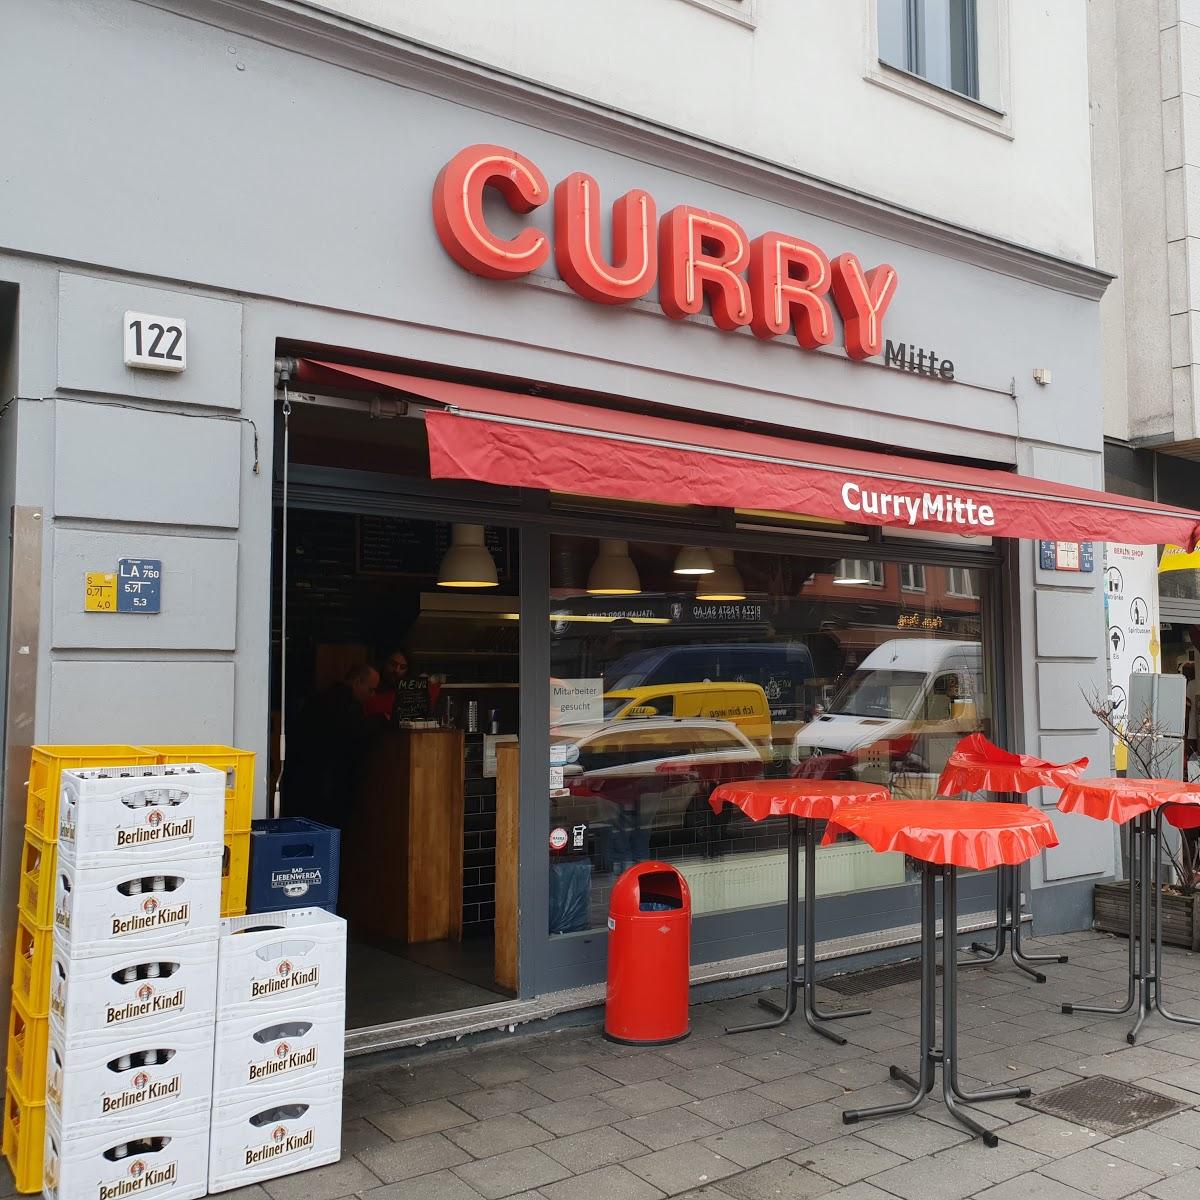 Restaurant "Cult Curry Mitte" in Berlin